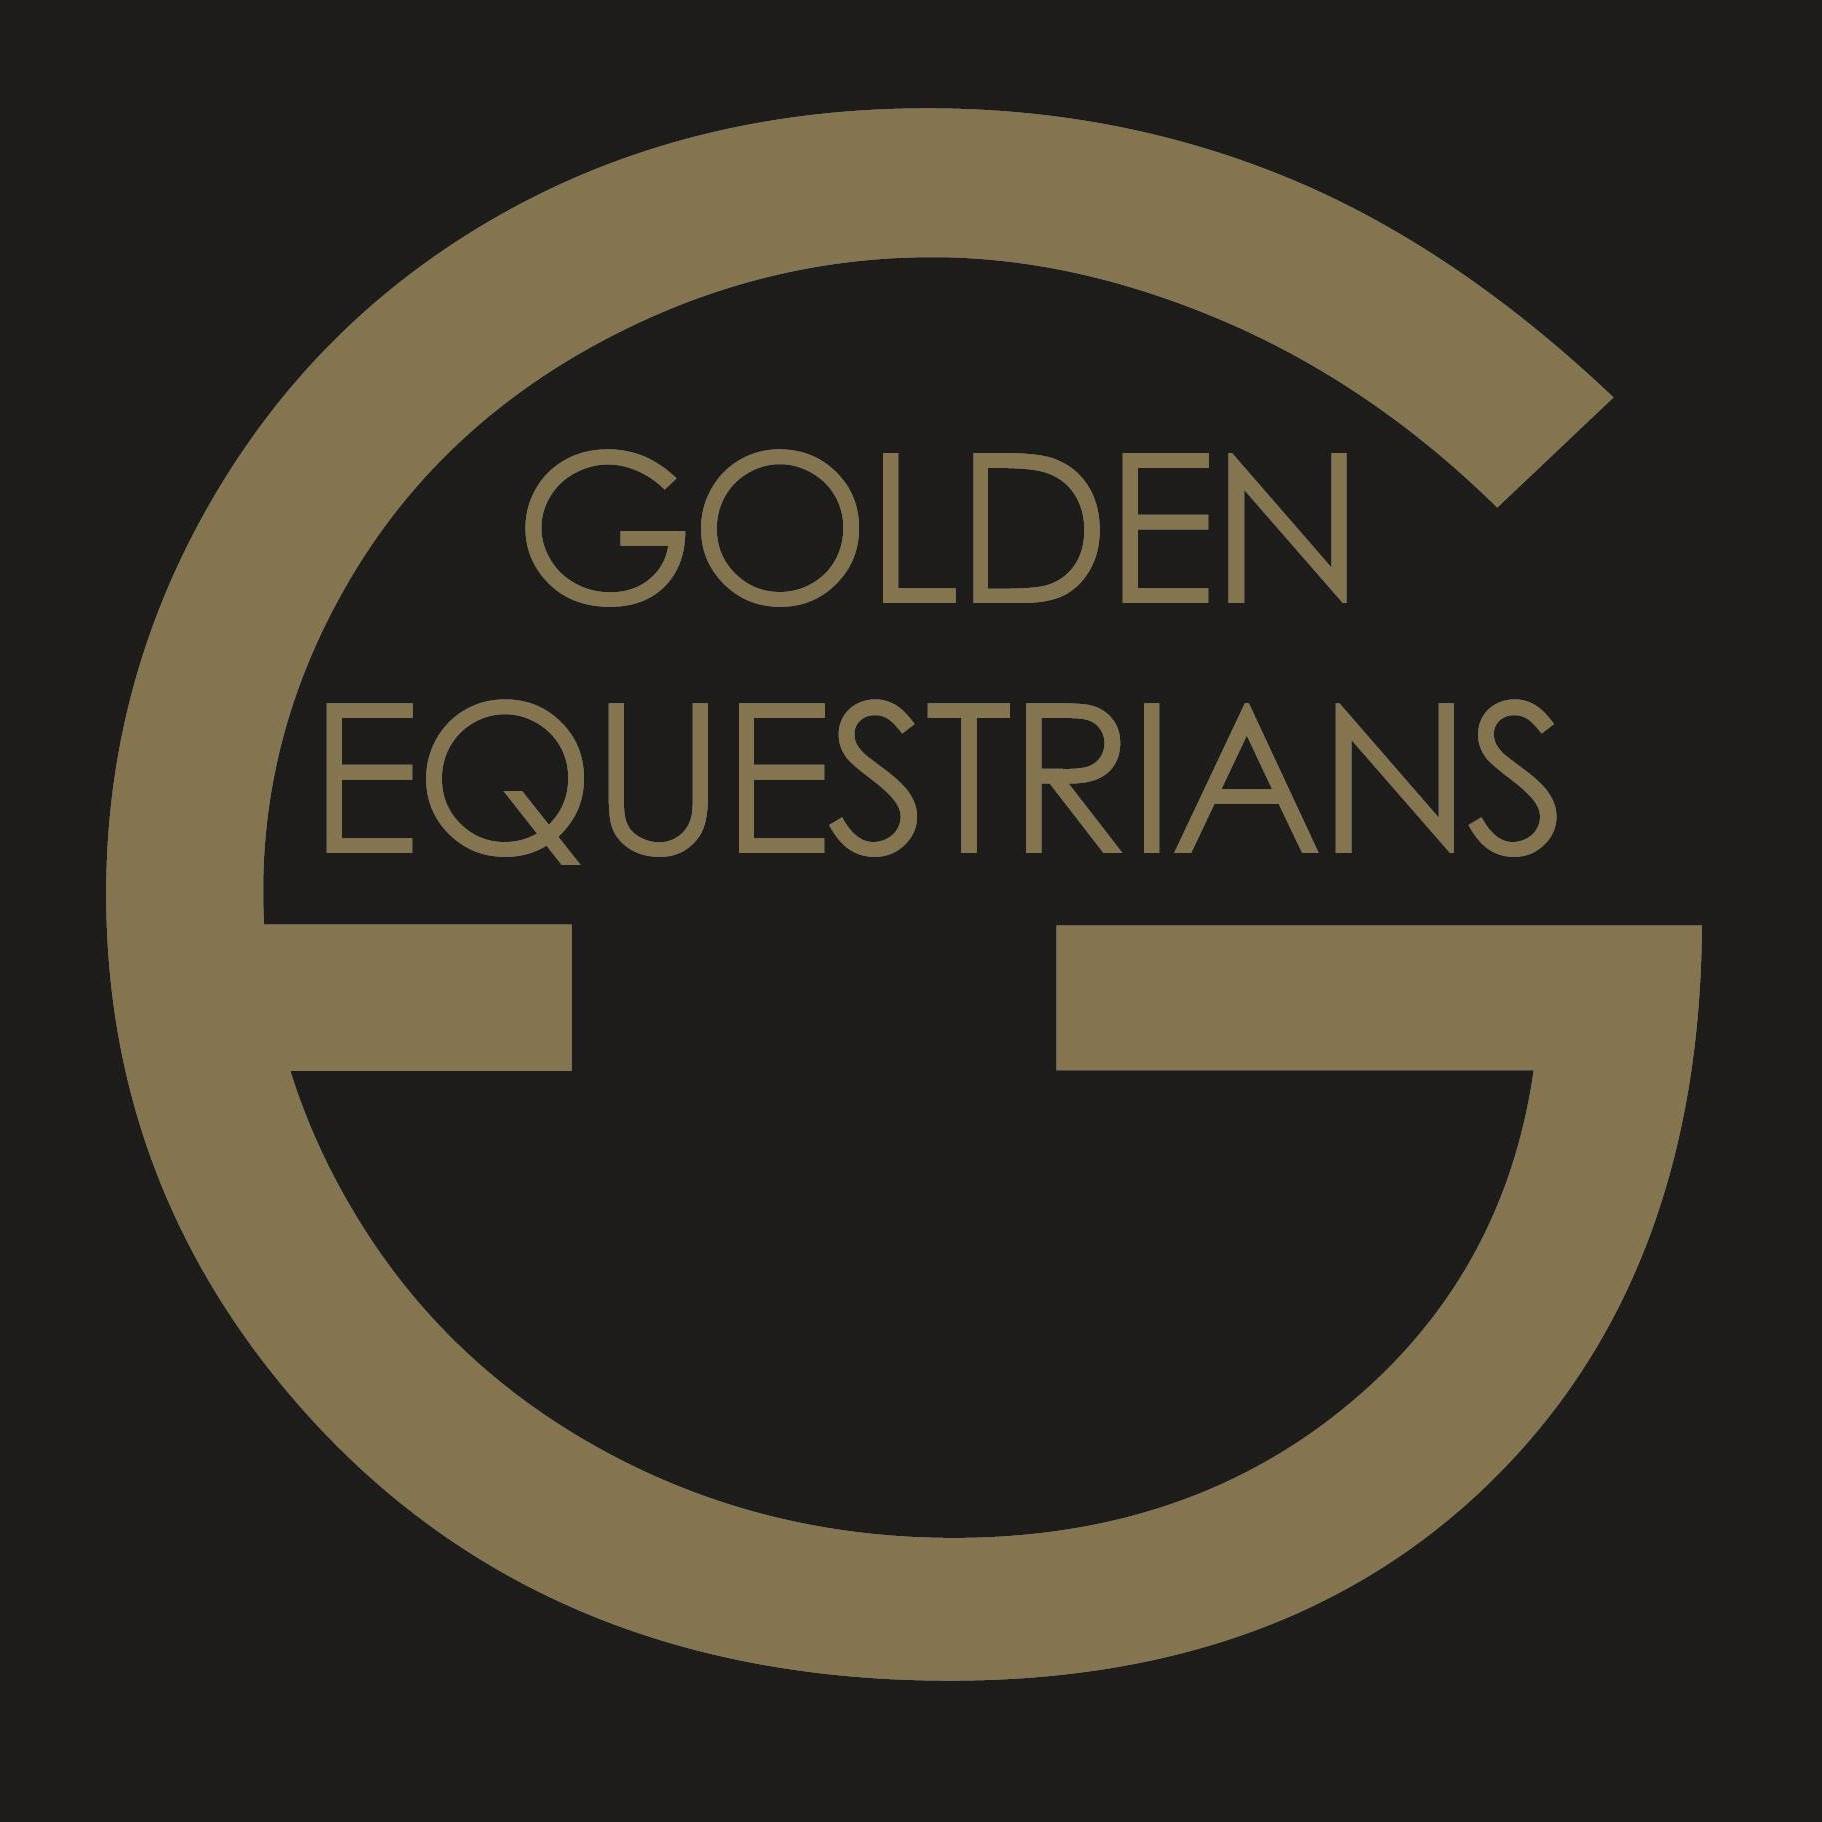 Golden equestrian